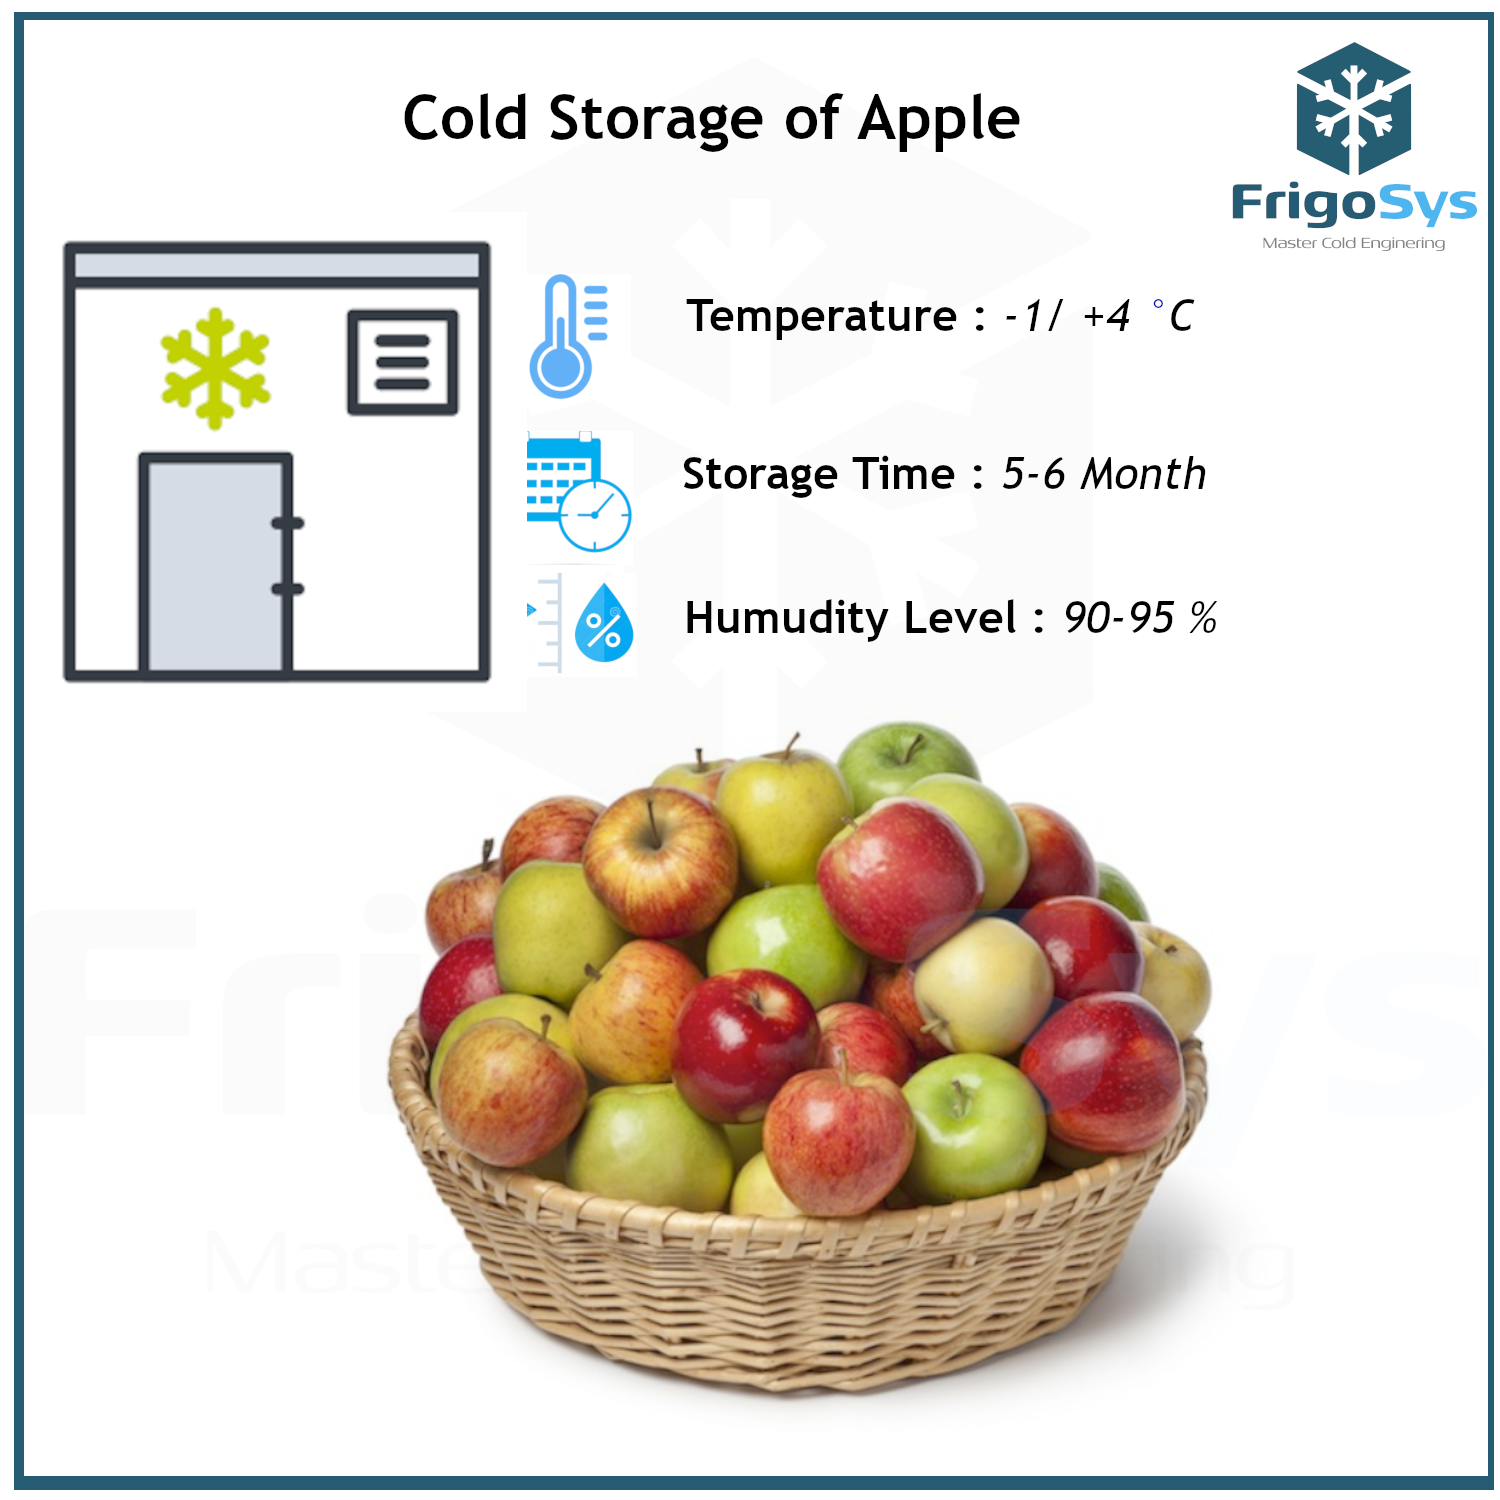 Cold Storage of Apple